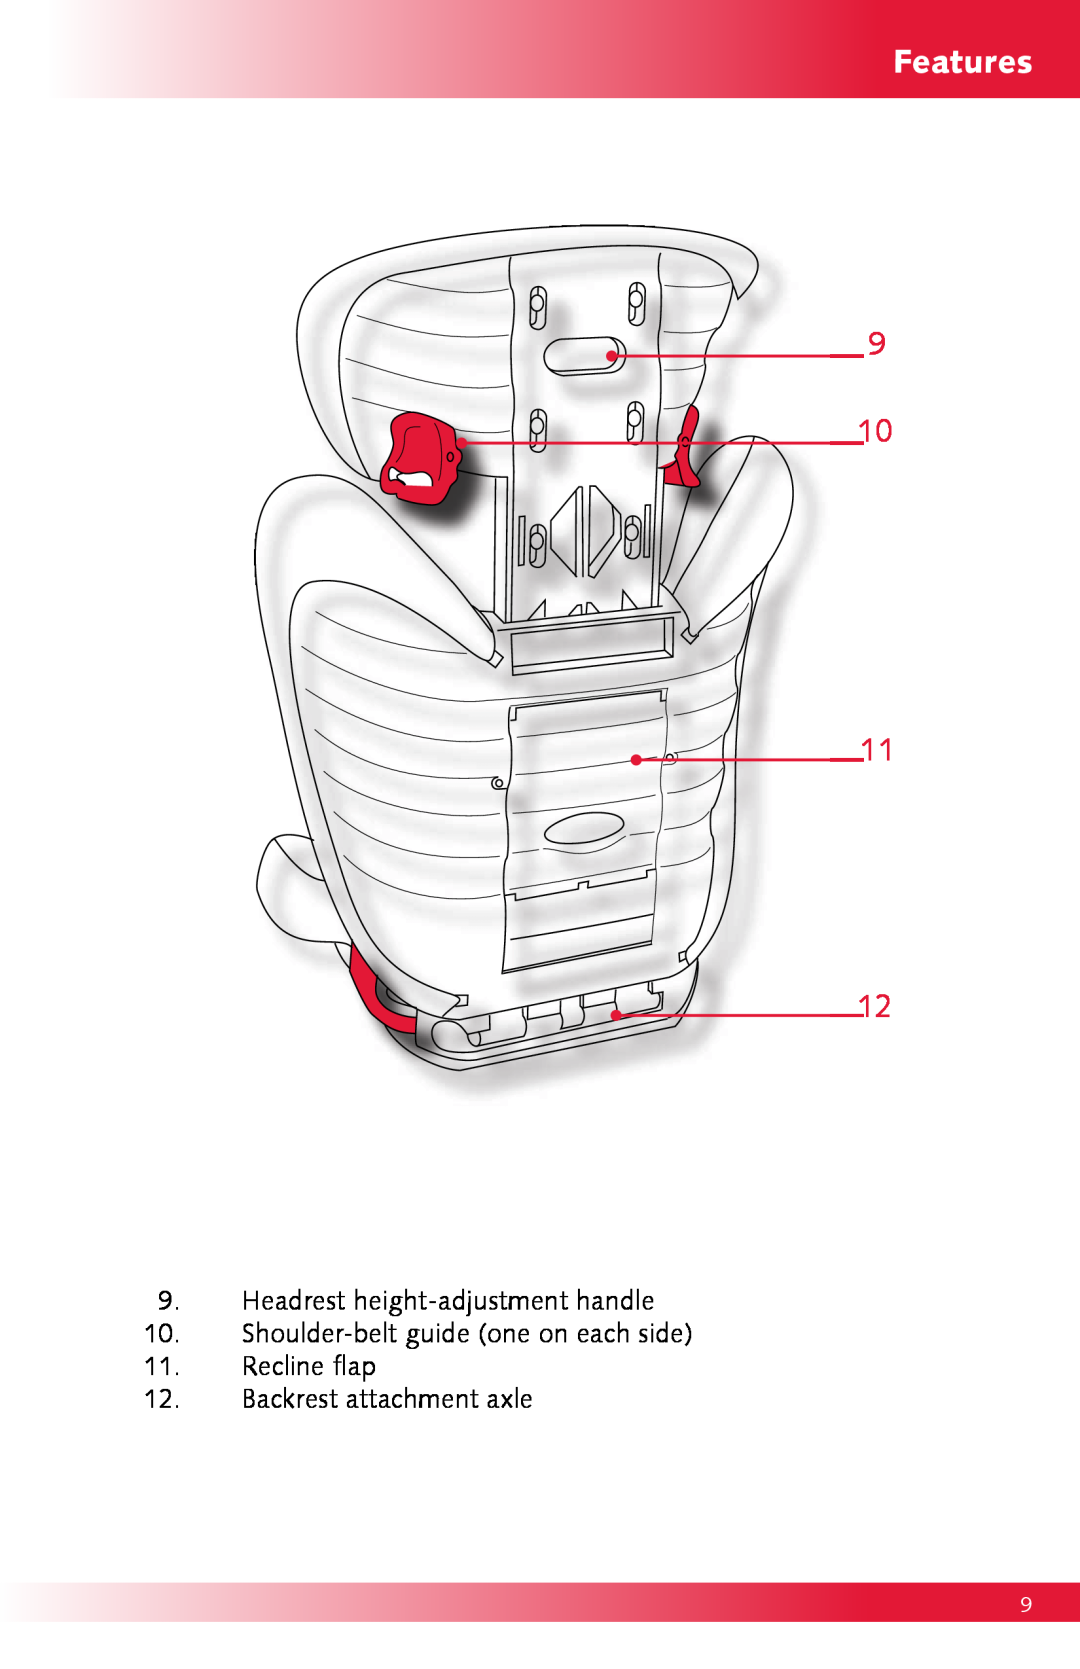 Britax Monarch manual Features, Headrest height-adjustment handle, Shoulder-belt guide one on each side 11. Recline flap 